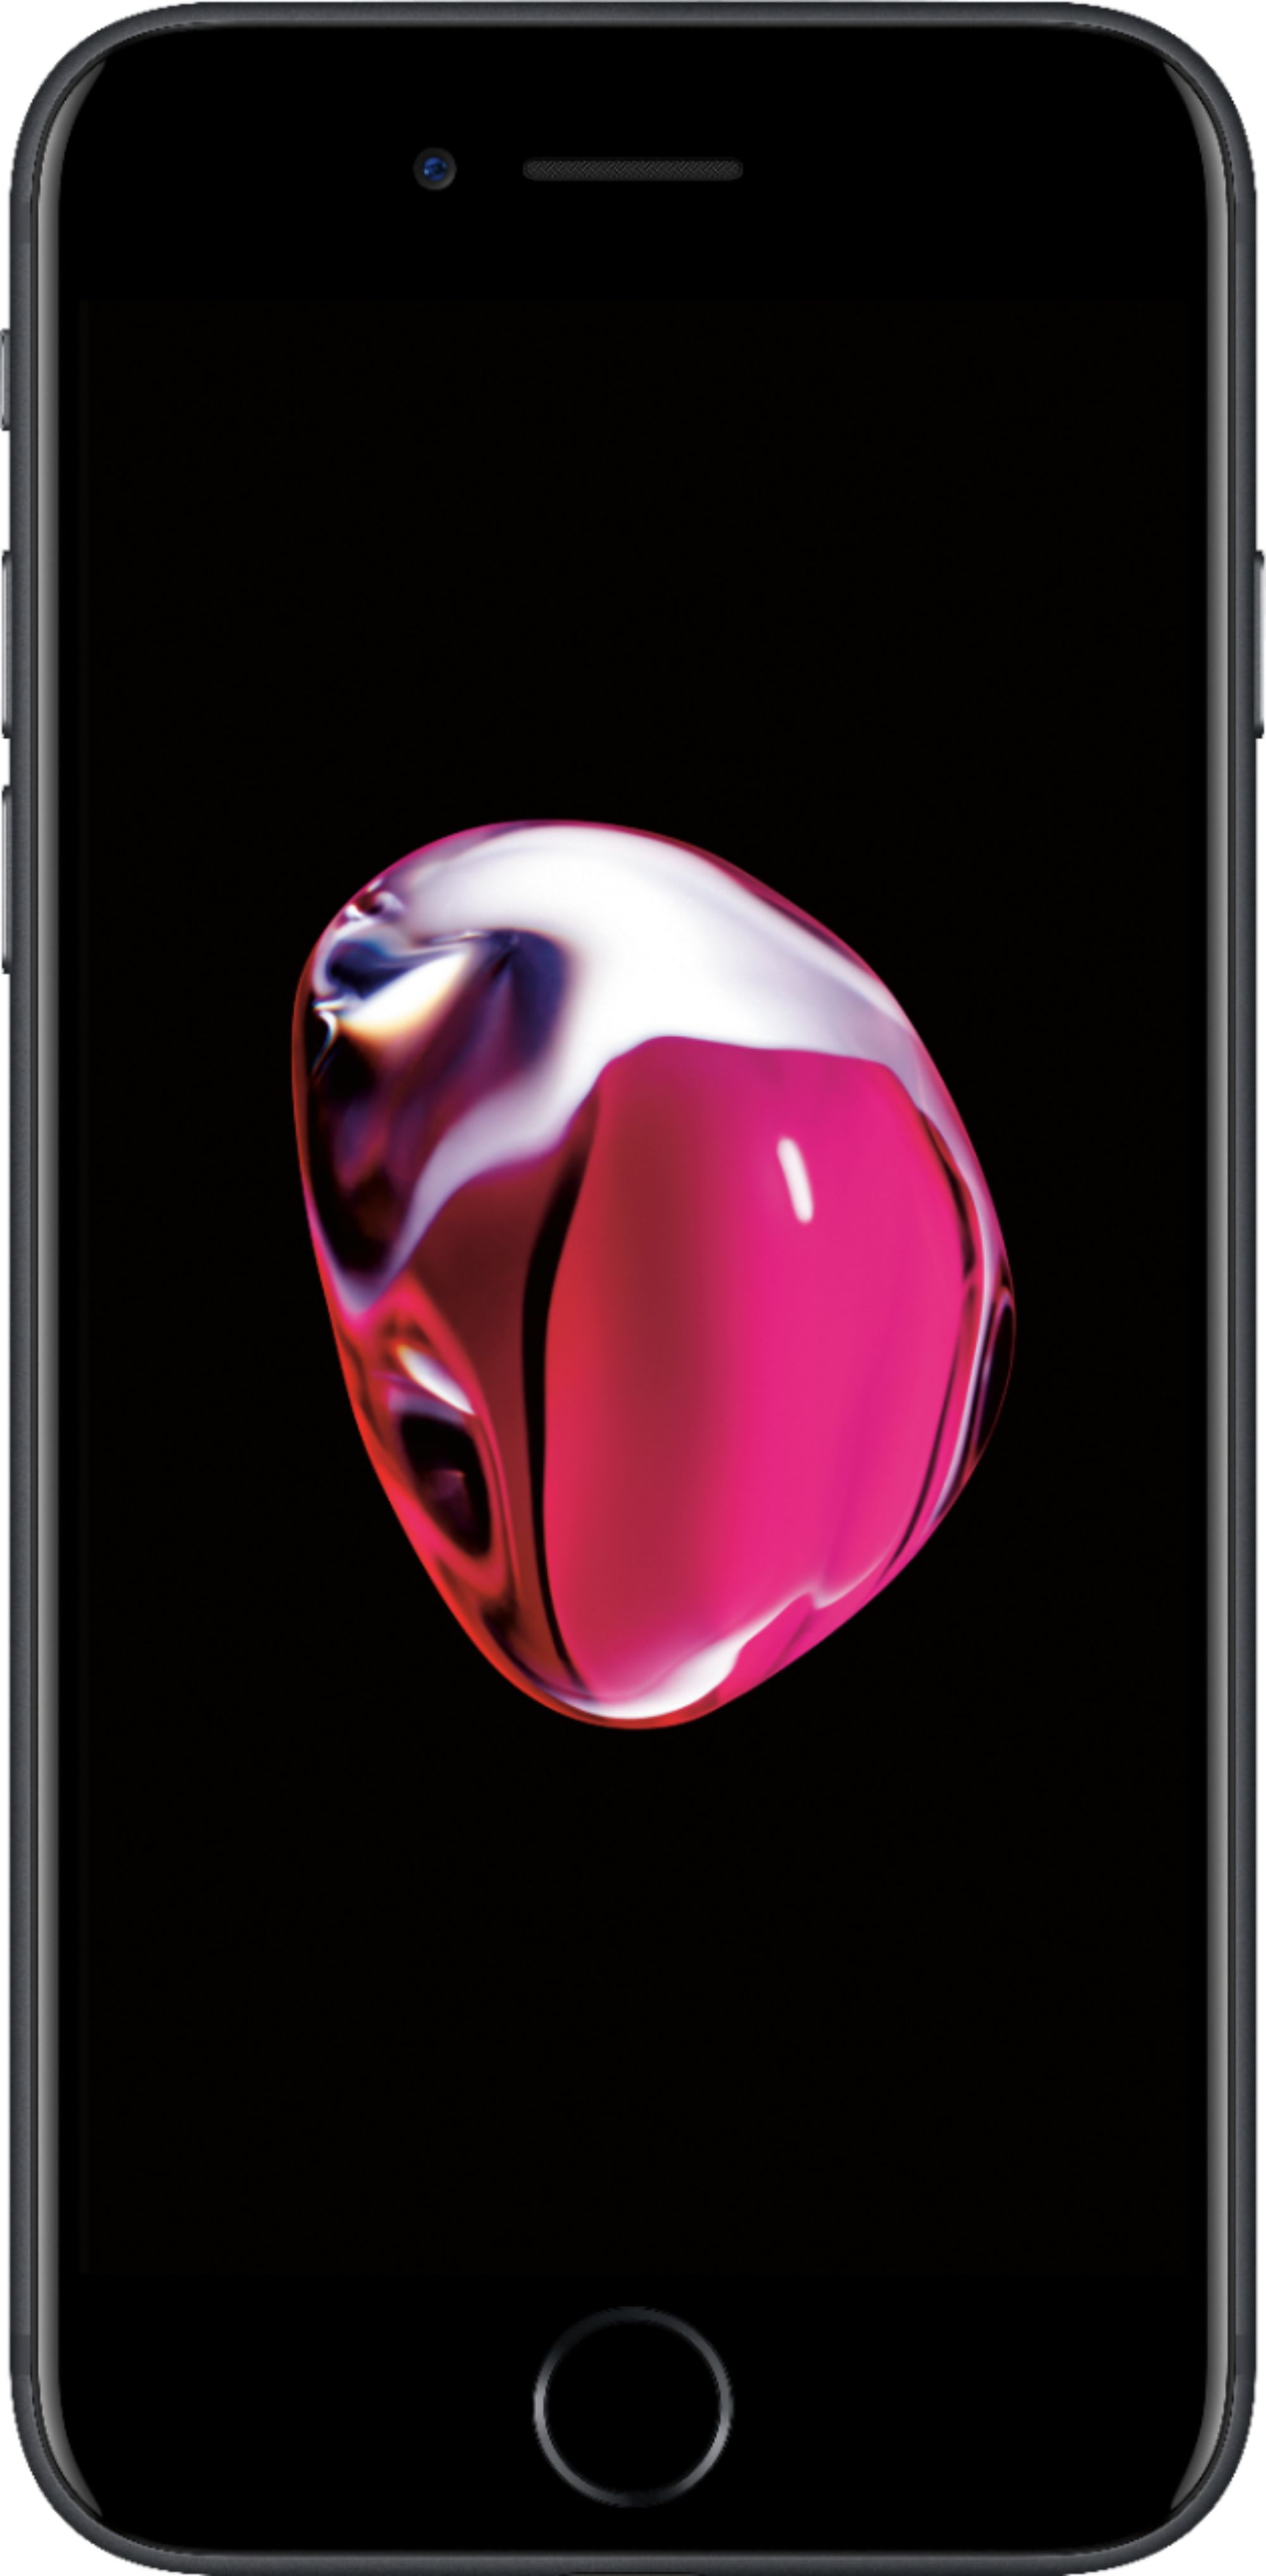 At T Prepaid Apple Iphone 7 With 32gb Memory Prepaid Cell Phone Black Apple Iphone 7 Idb Best Buy